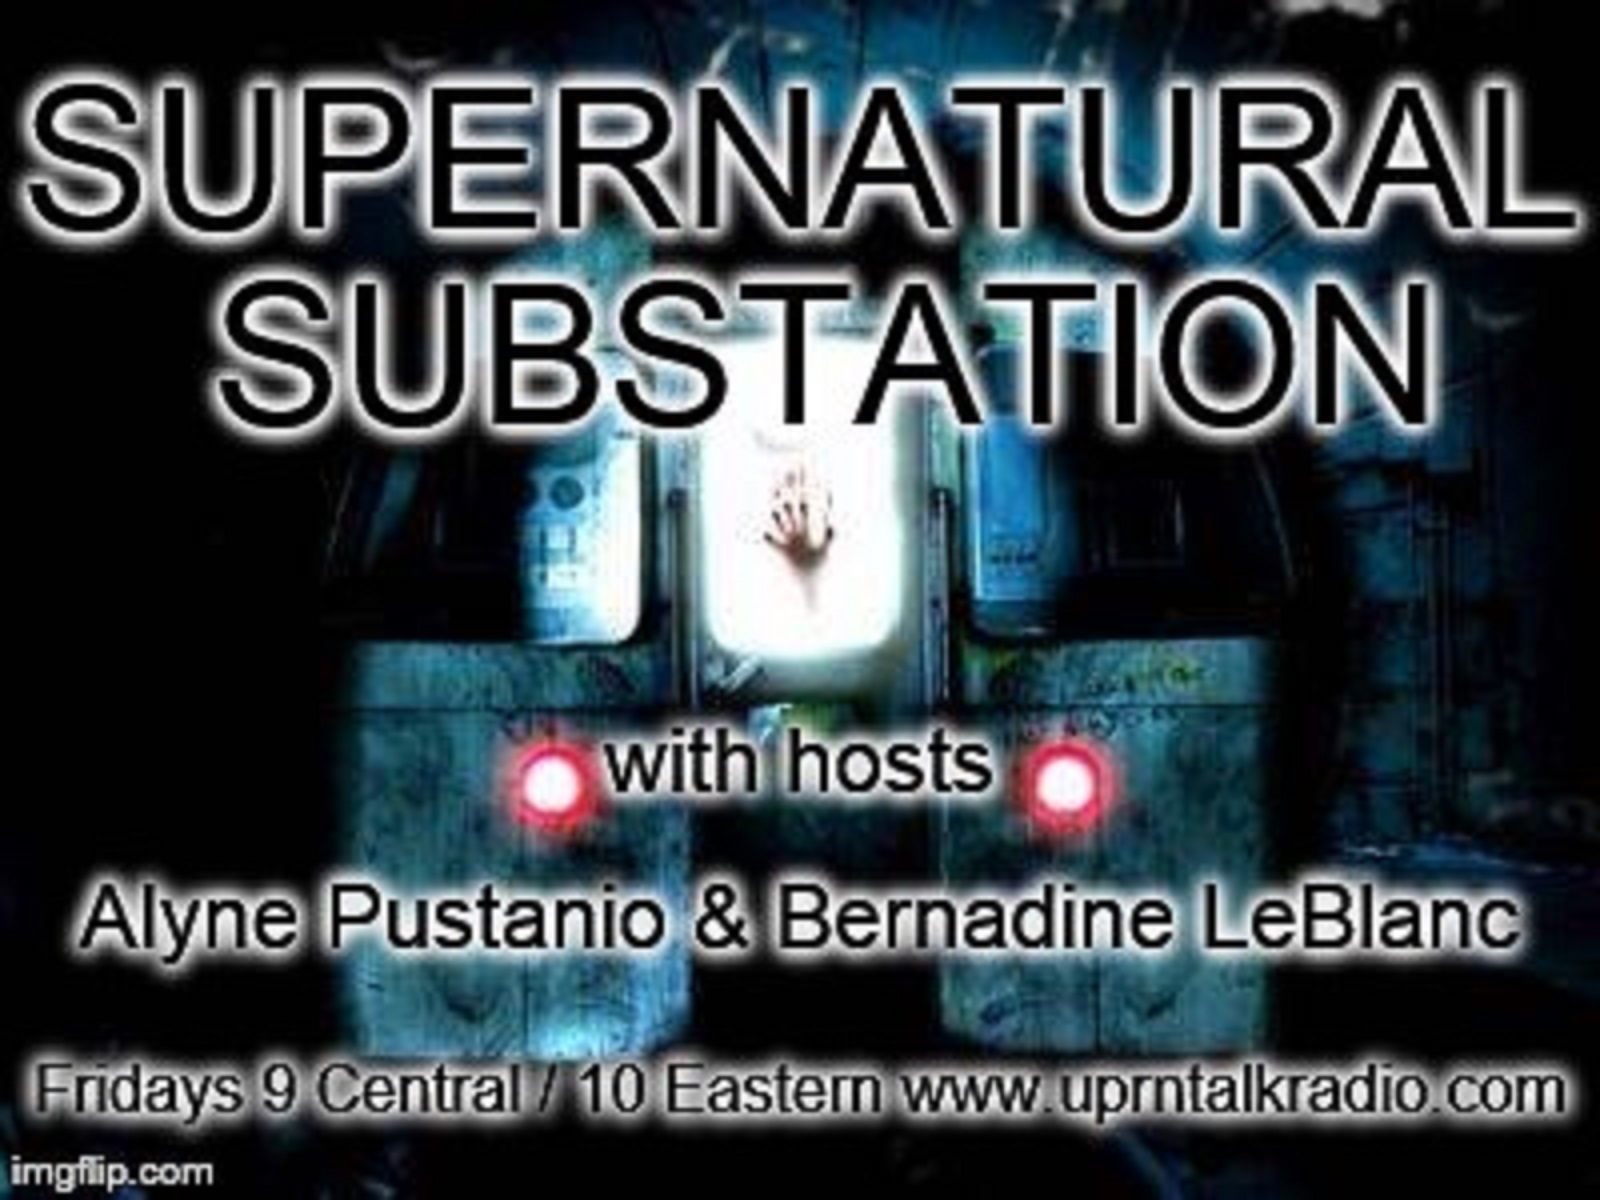 Supernatural Substation 8 18 2017 Karen Dahlman Spirits Of Ouija Hosts Alyne Pustanio Bernadine Leblanc